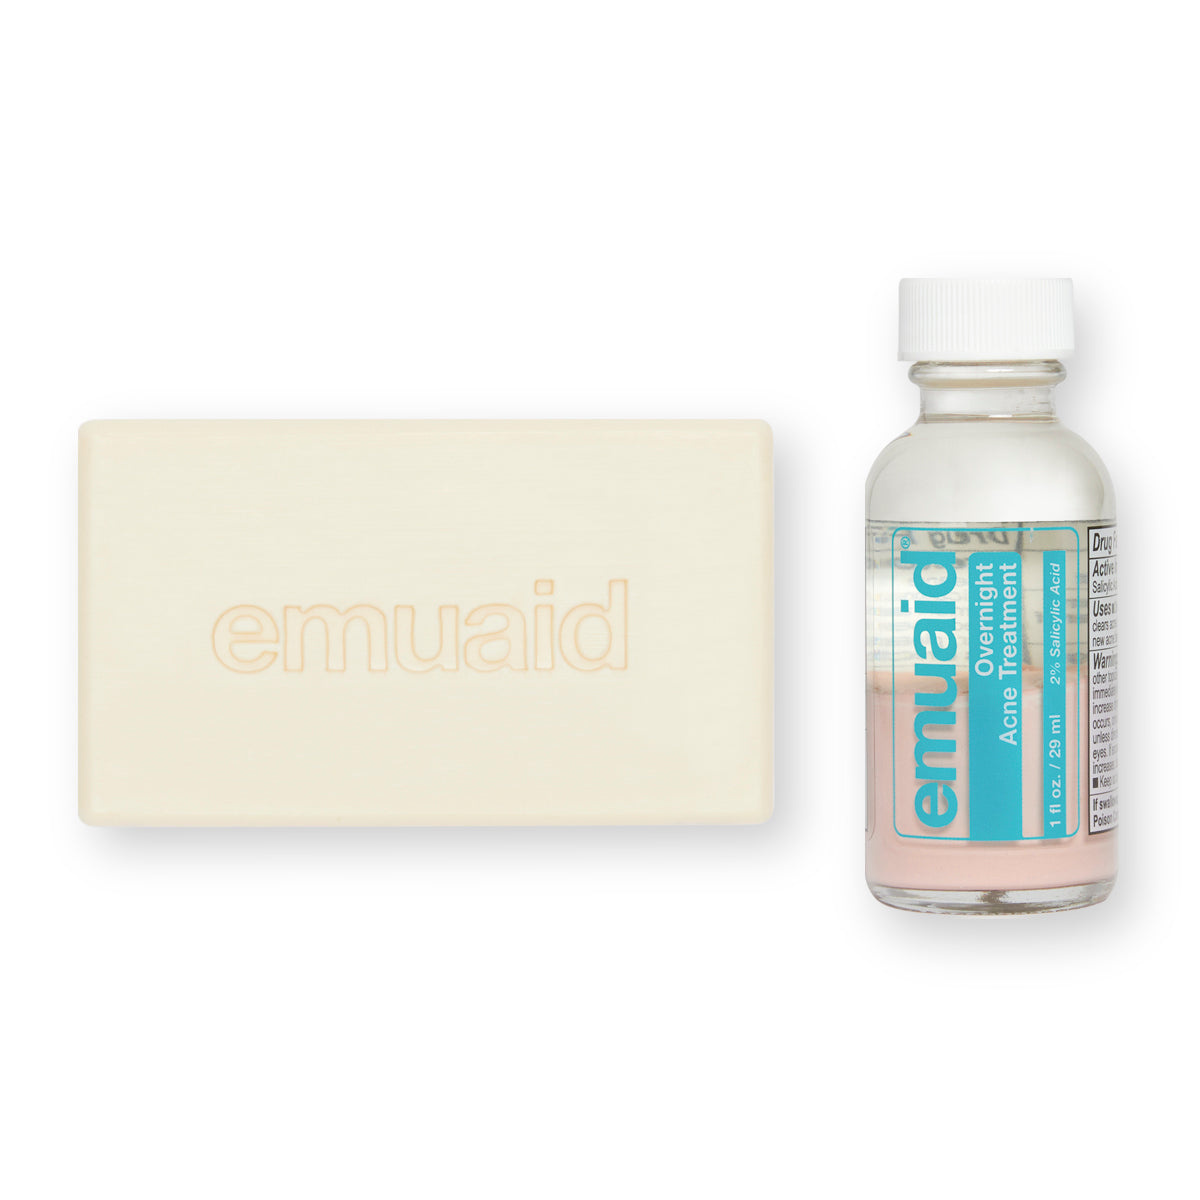 Esta es una imagen del EMUAID® Overnight Acne Treatment.and the EMUAID® Therapeutic Moisture Bar.